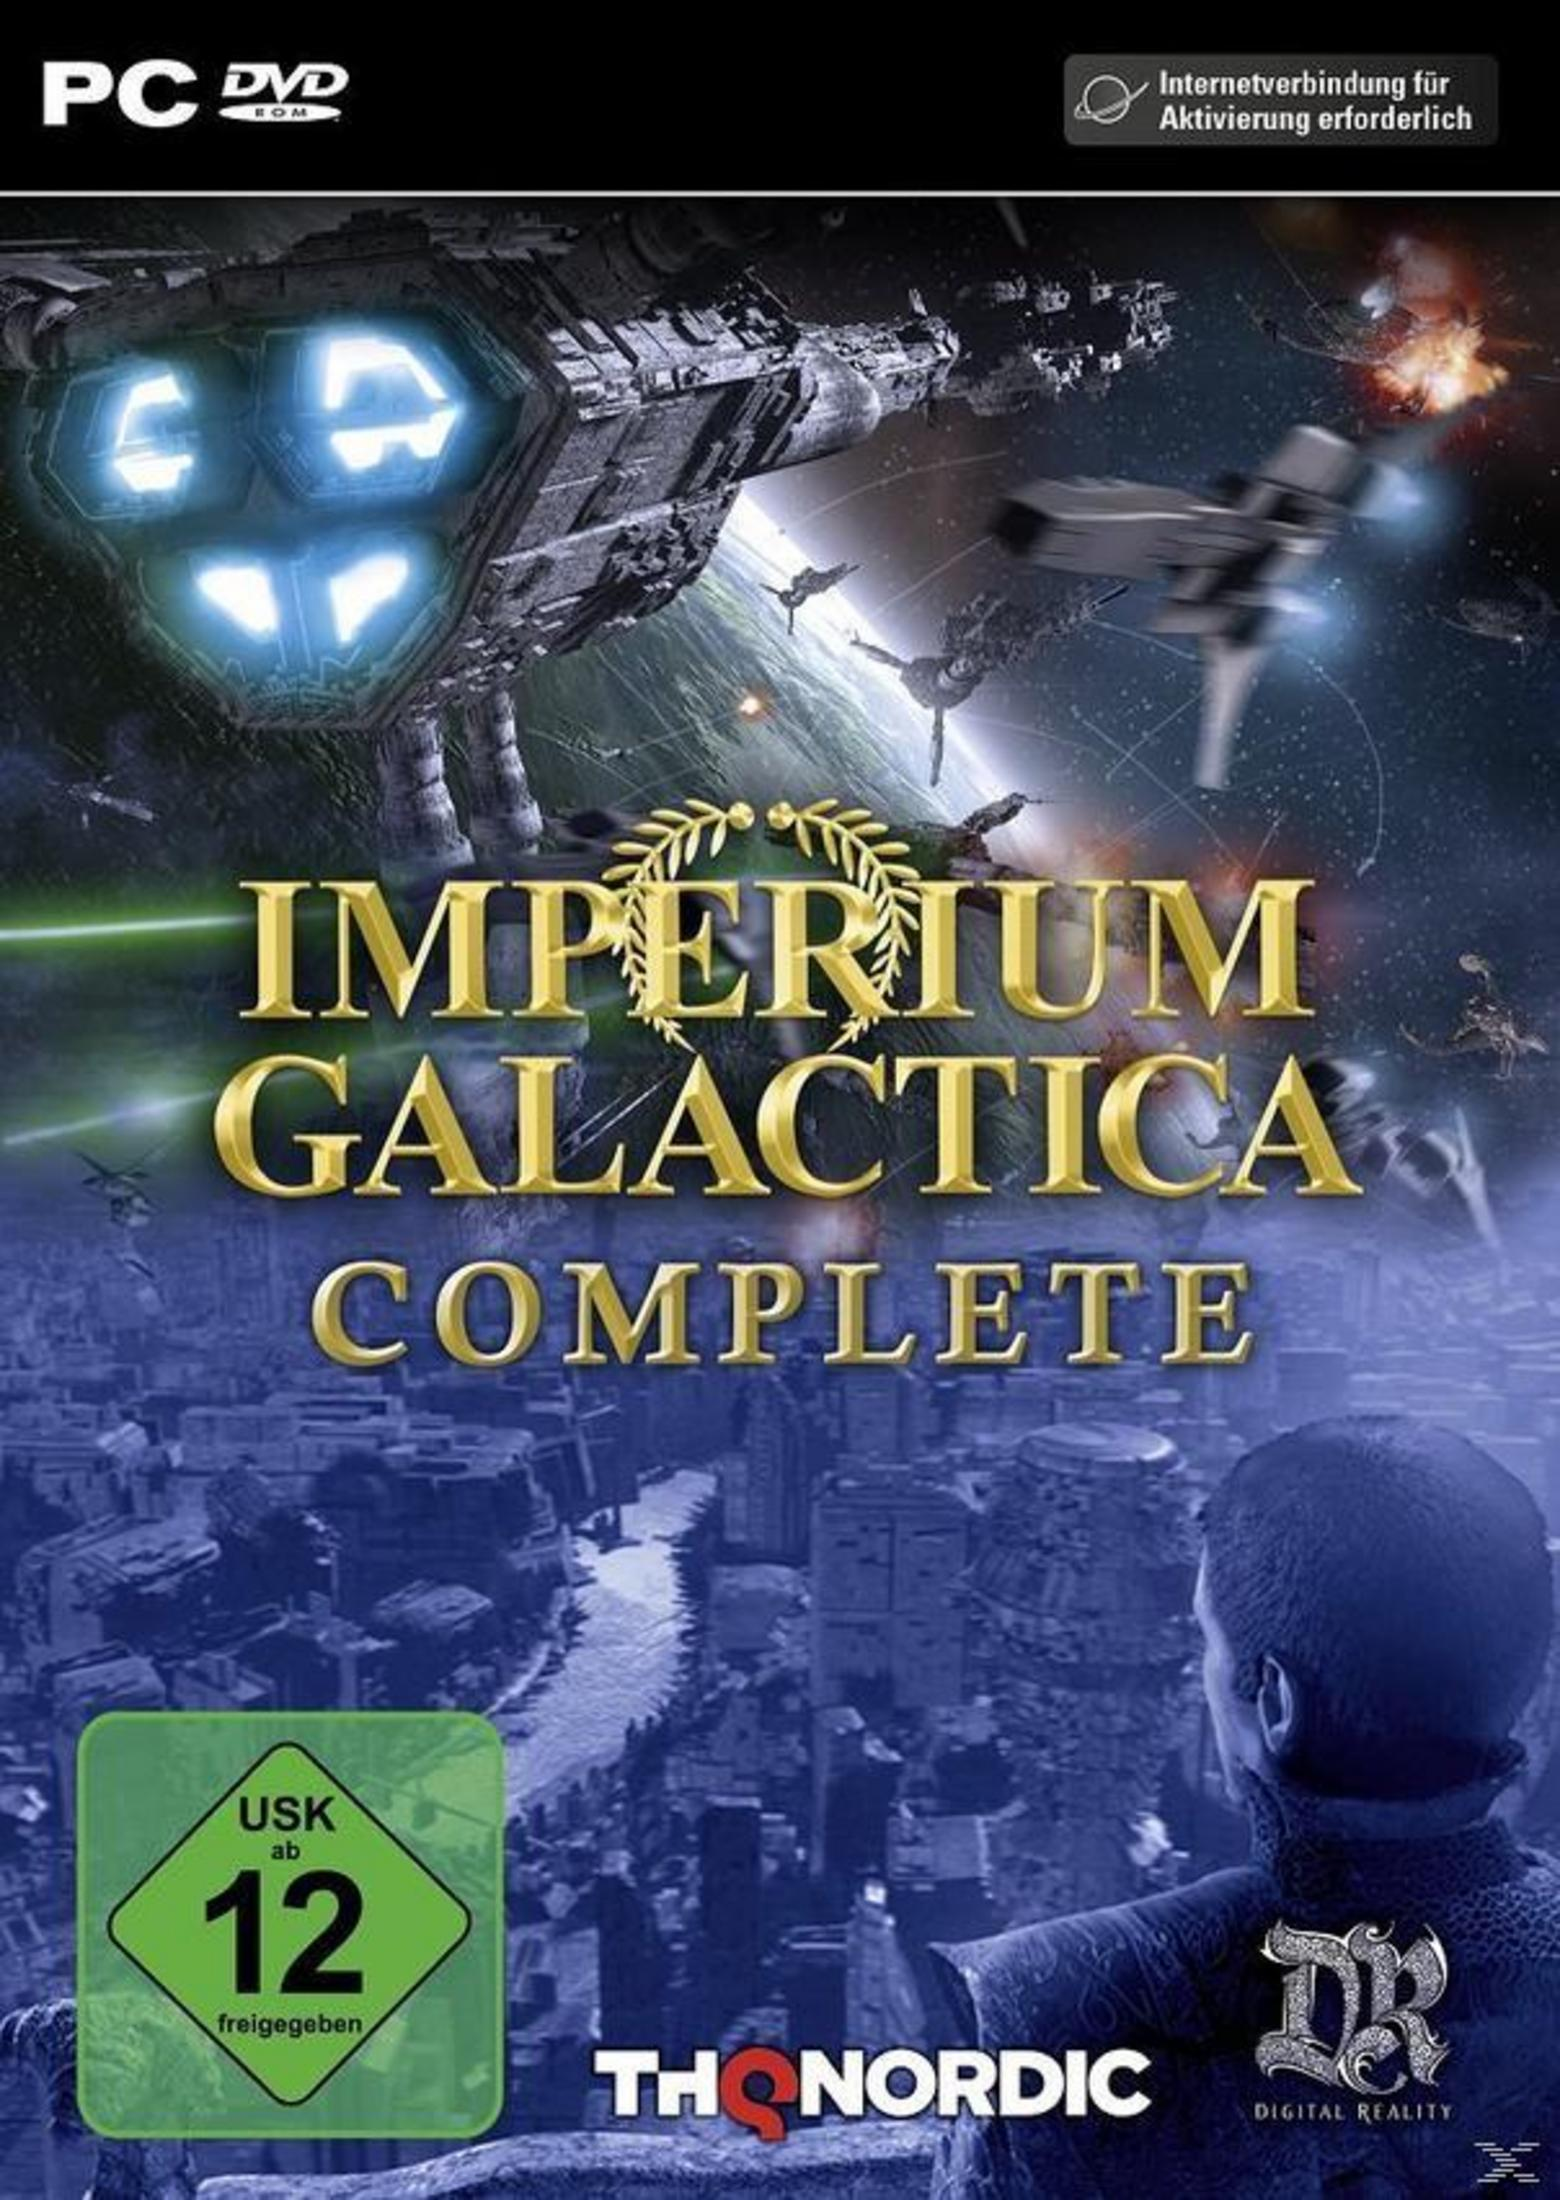 Galactica [PC] Collection Imperium PC - Complete